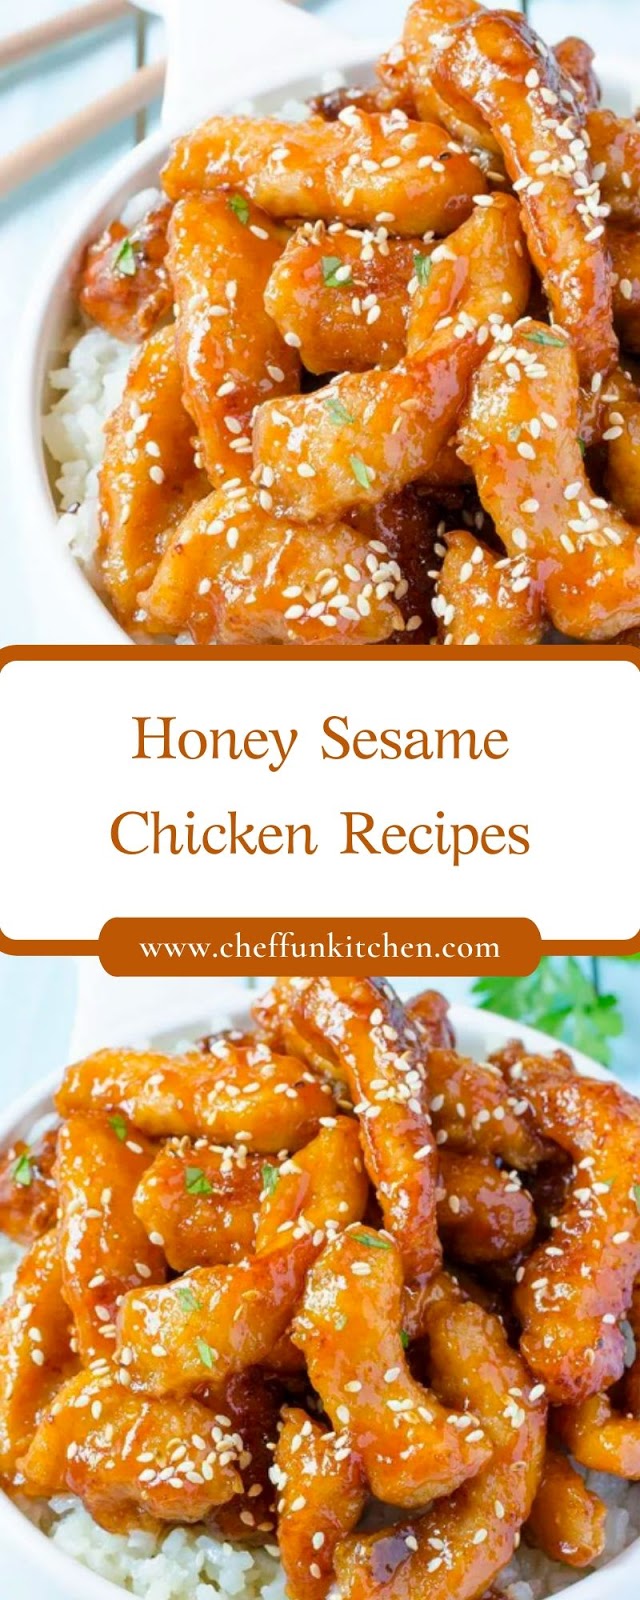 Honey Sesame Chicken Recipes